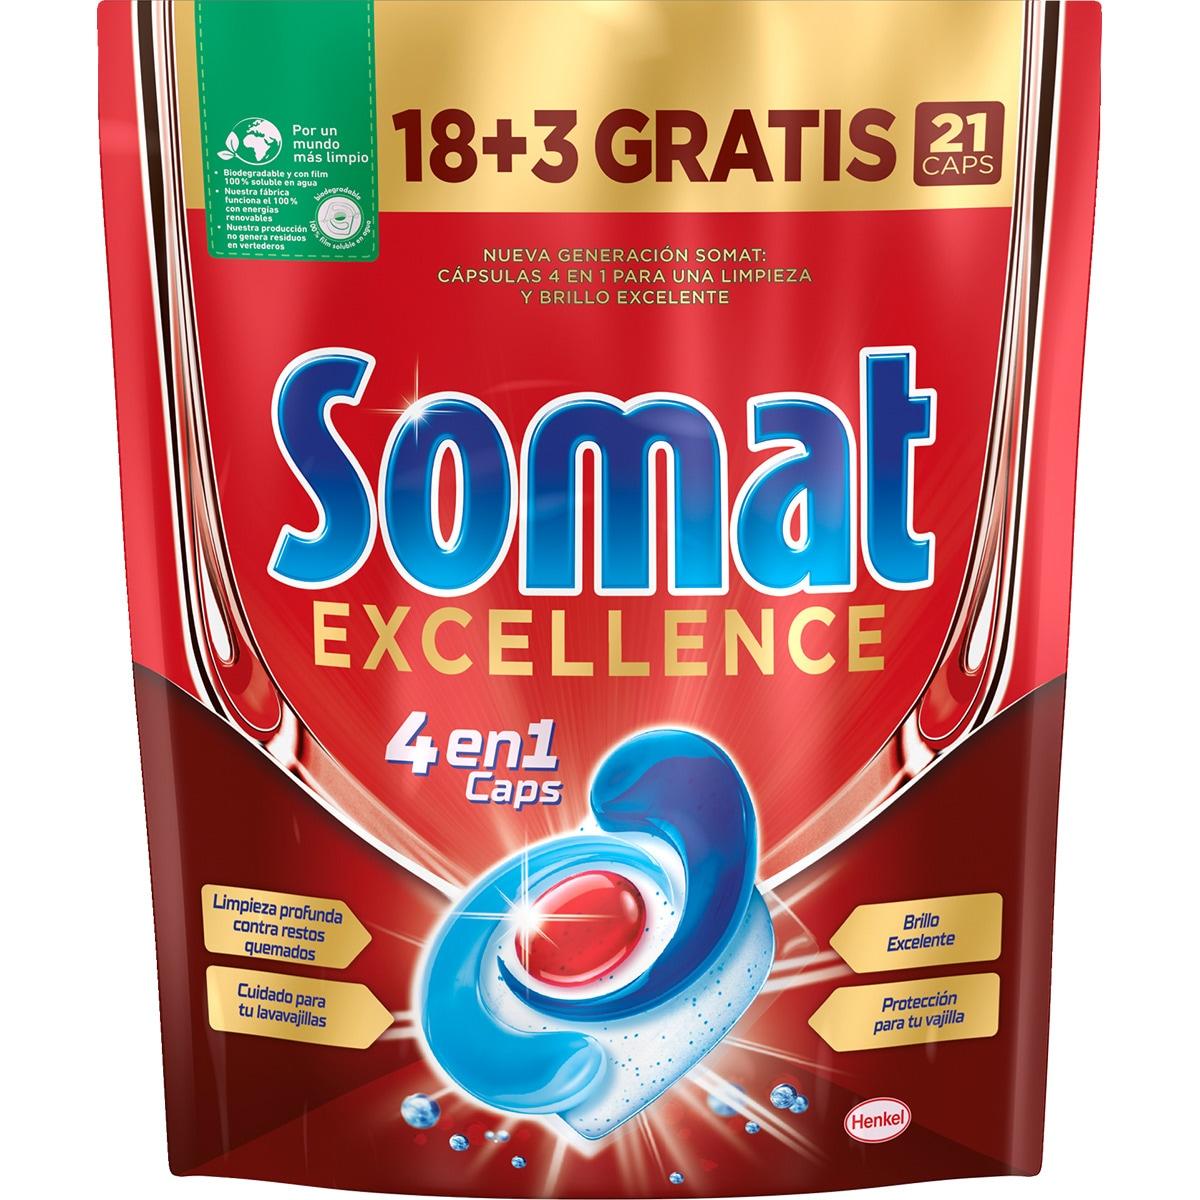 Somat Excellence Detergente Lavavajillas 4 en 1 bolsa 18+3